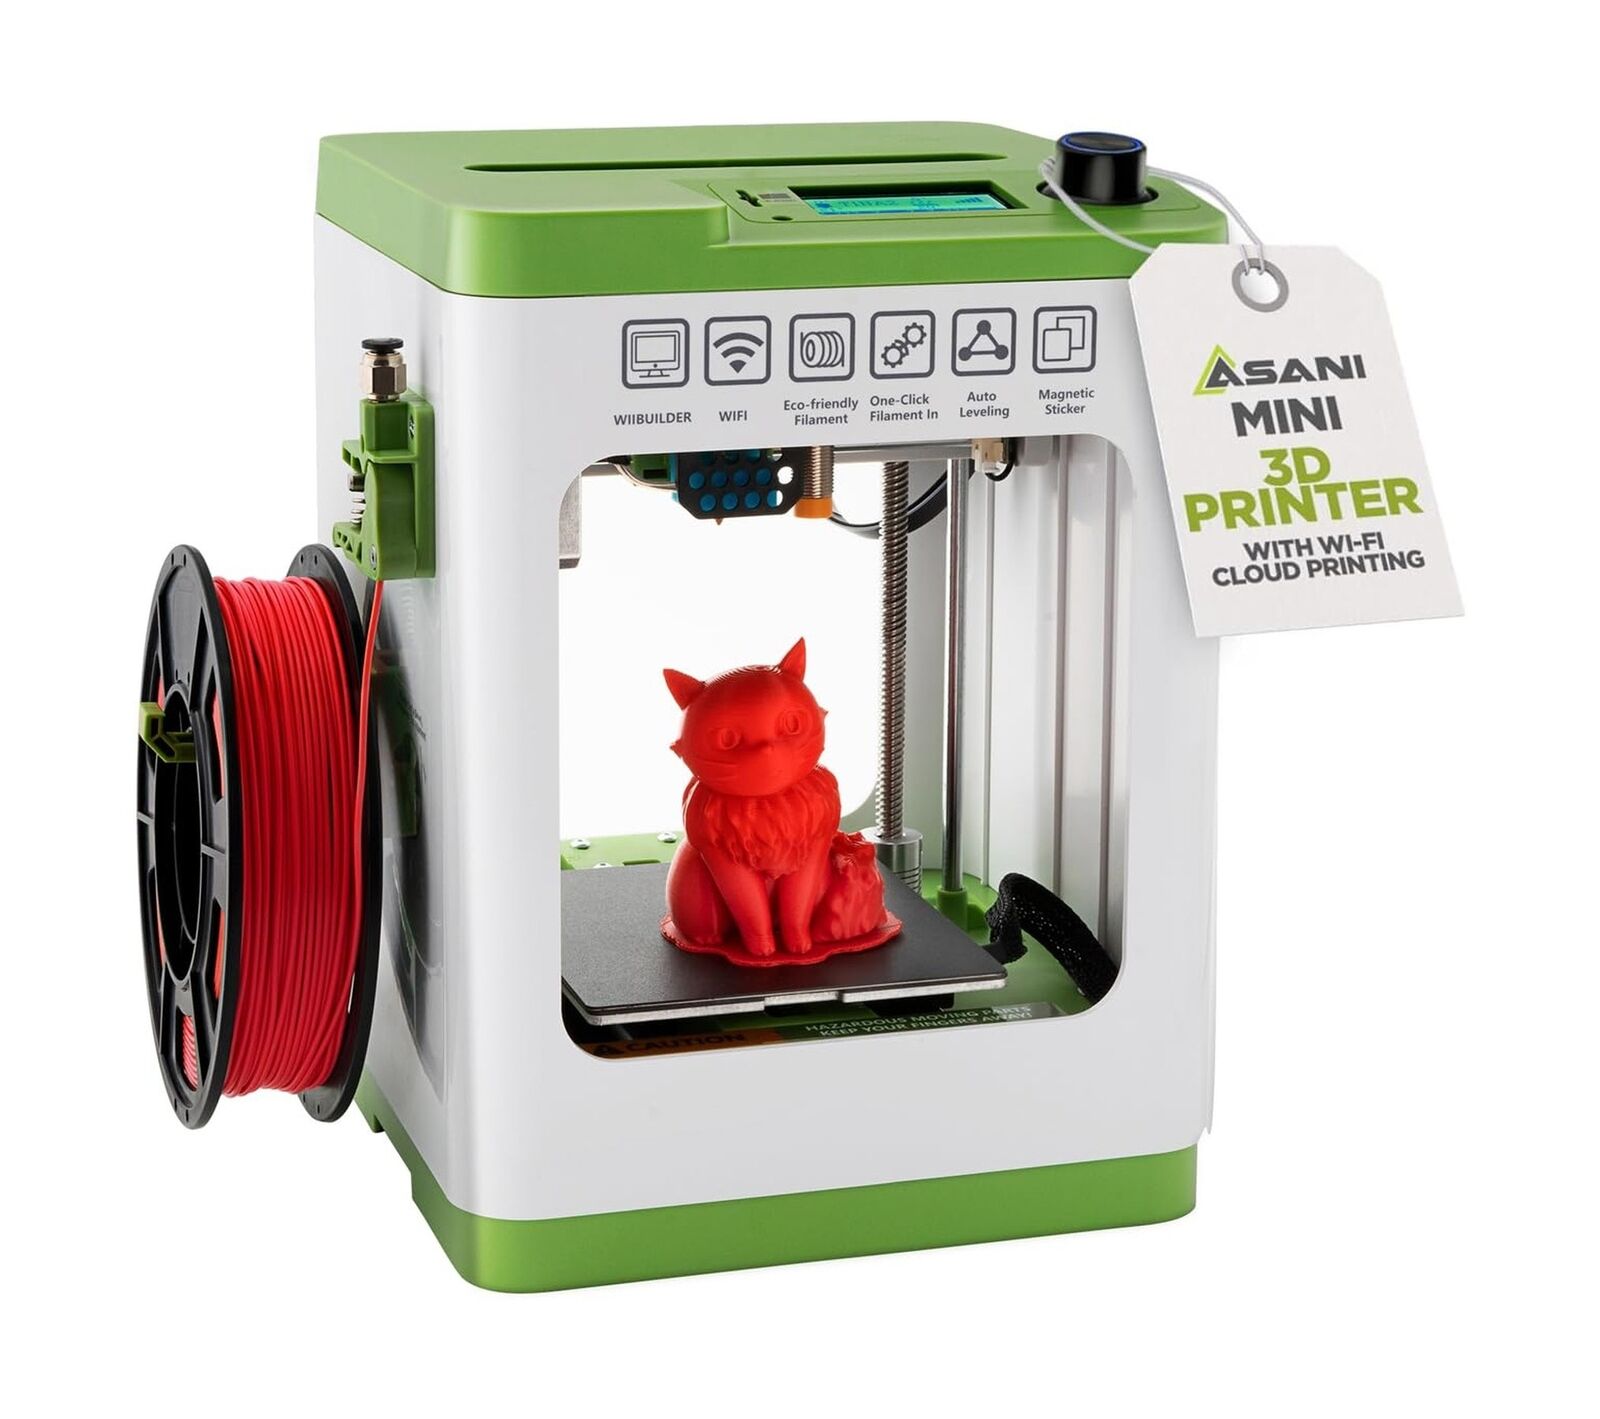 Fully Assembled Mini 3D Printer for Kids and Beginners - Complete Starter Kit...